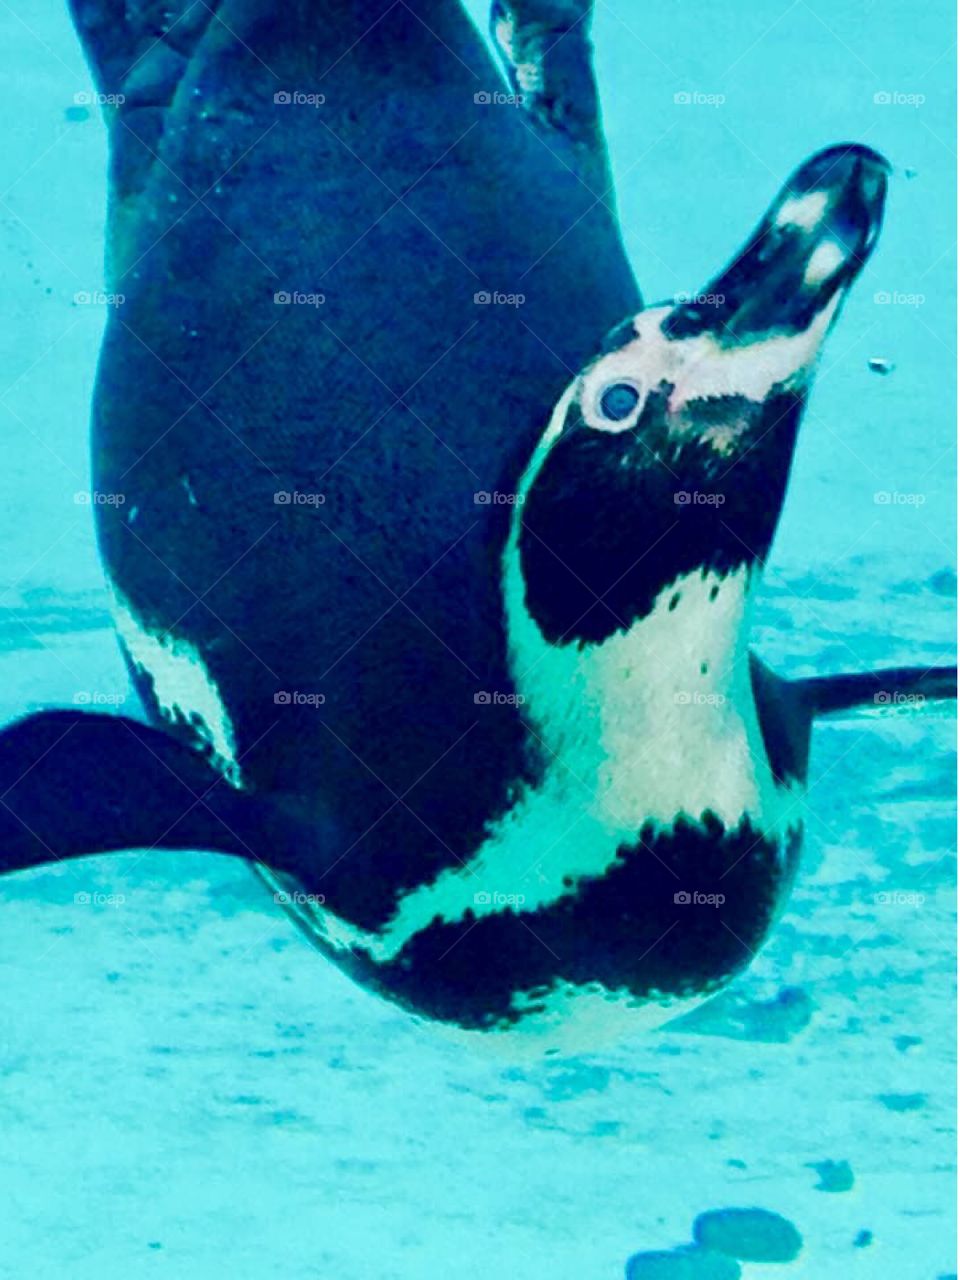 Underwater penguin central close up 